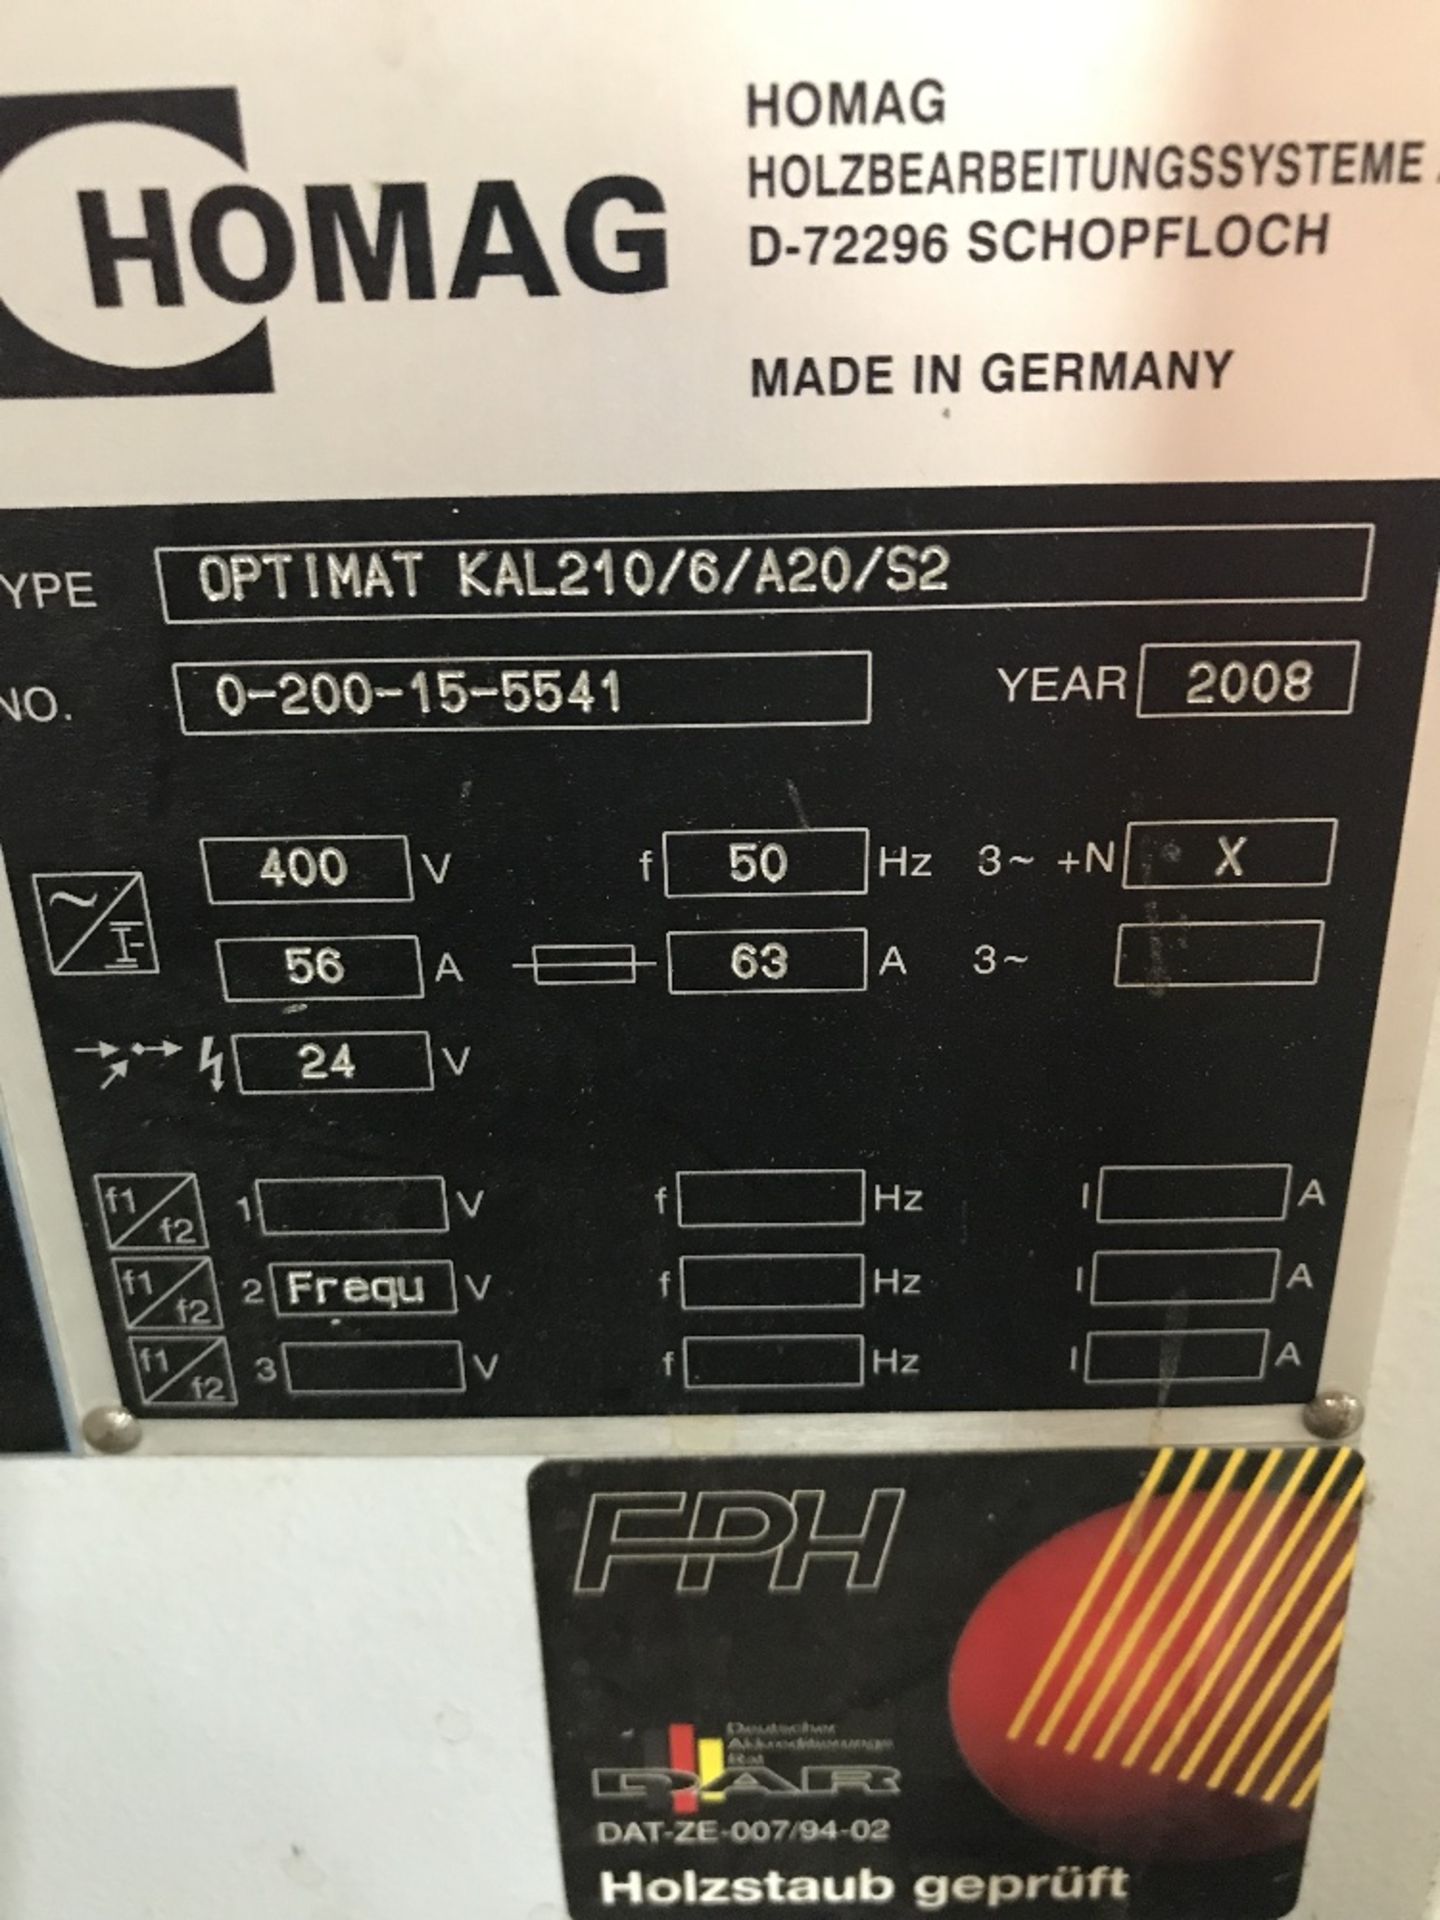 HOMAG Optimat Type KAL 210 6/A20/S2 Edge Banding Machine - Image 7 of 7